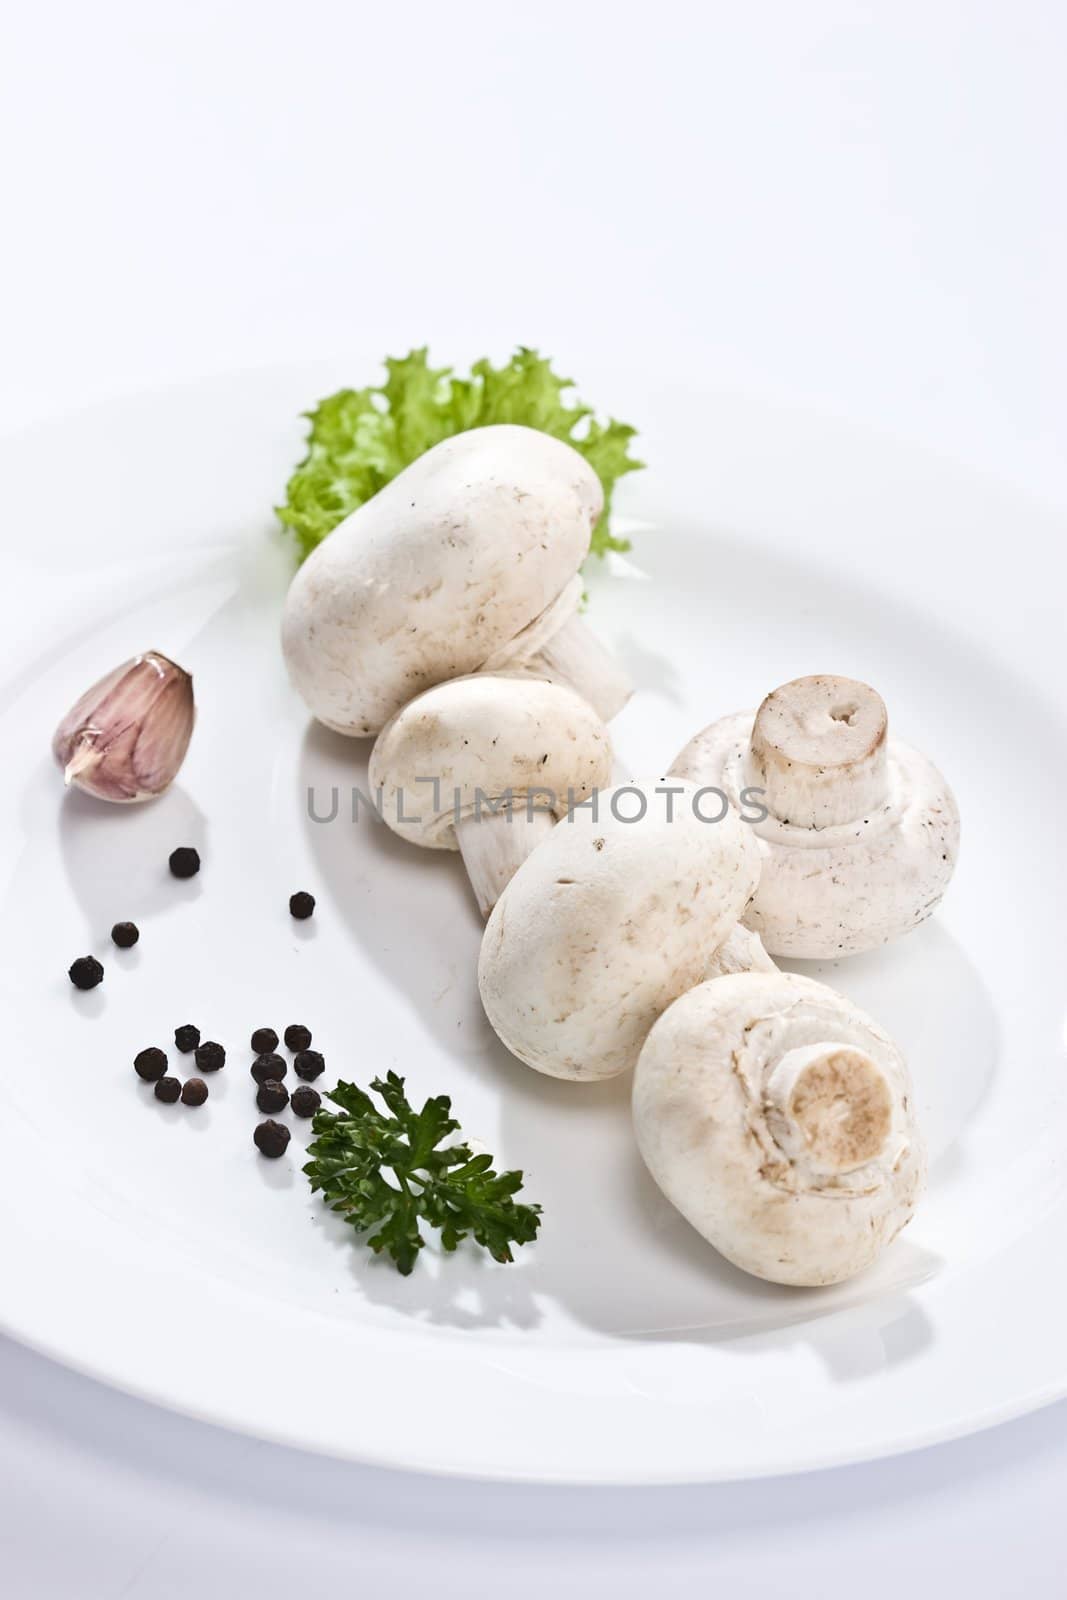 food serias: some mushrooms on the white plate